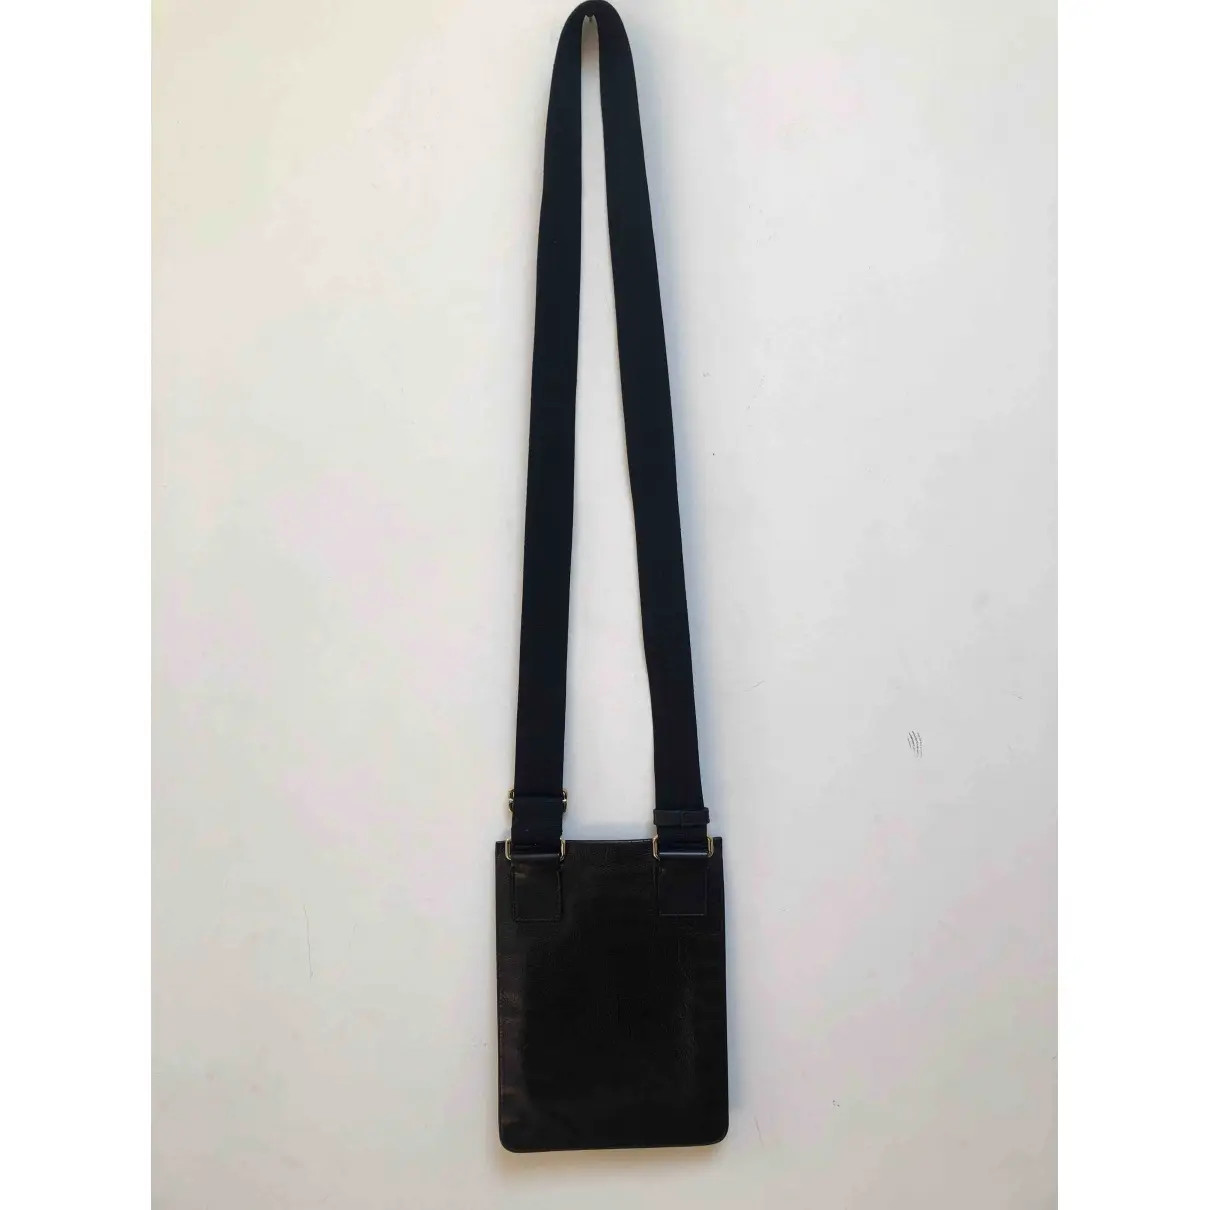 Yves Saint Laurent Leather bag for sale - Vintage